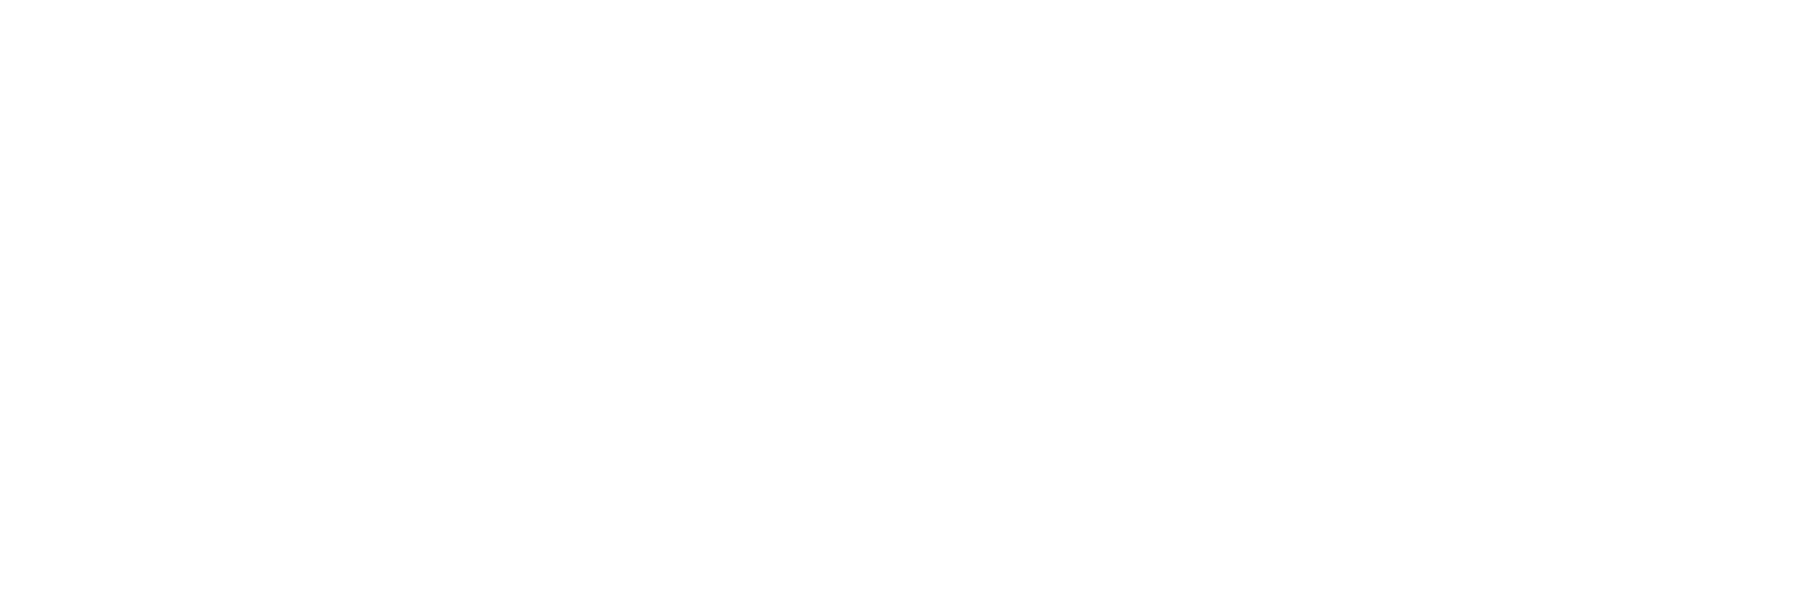 Iota Logo - EL PRÓXIMO BITCOIN? ECHE UN VISTAZO A IOTA | Iota Feed